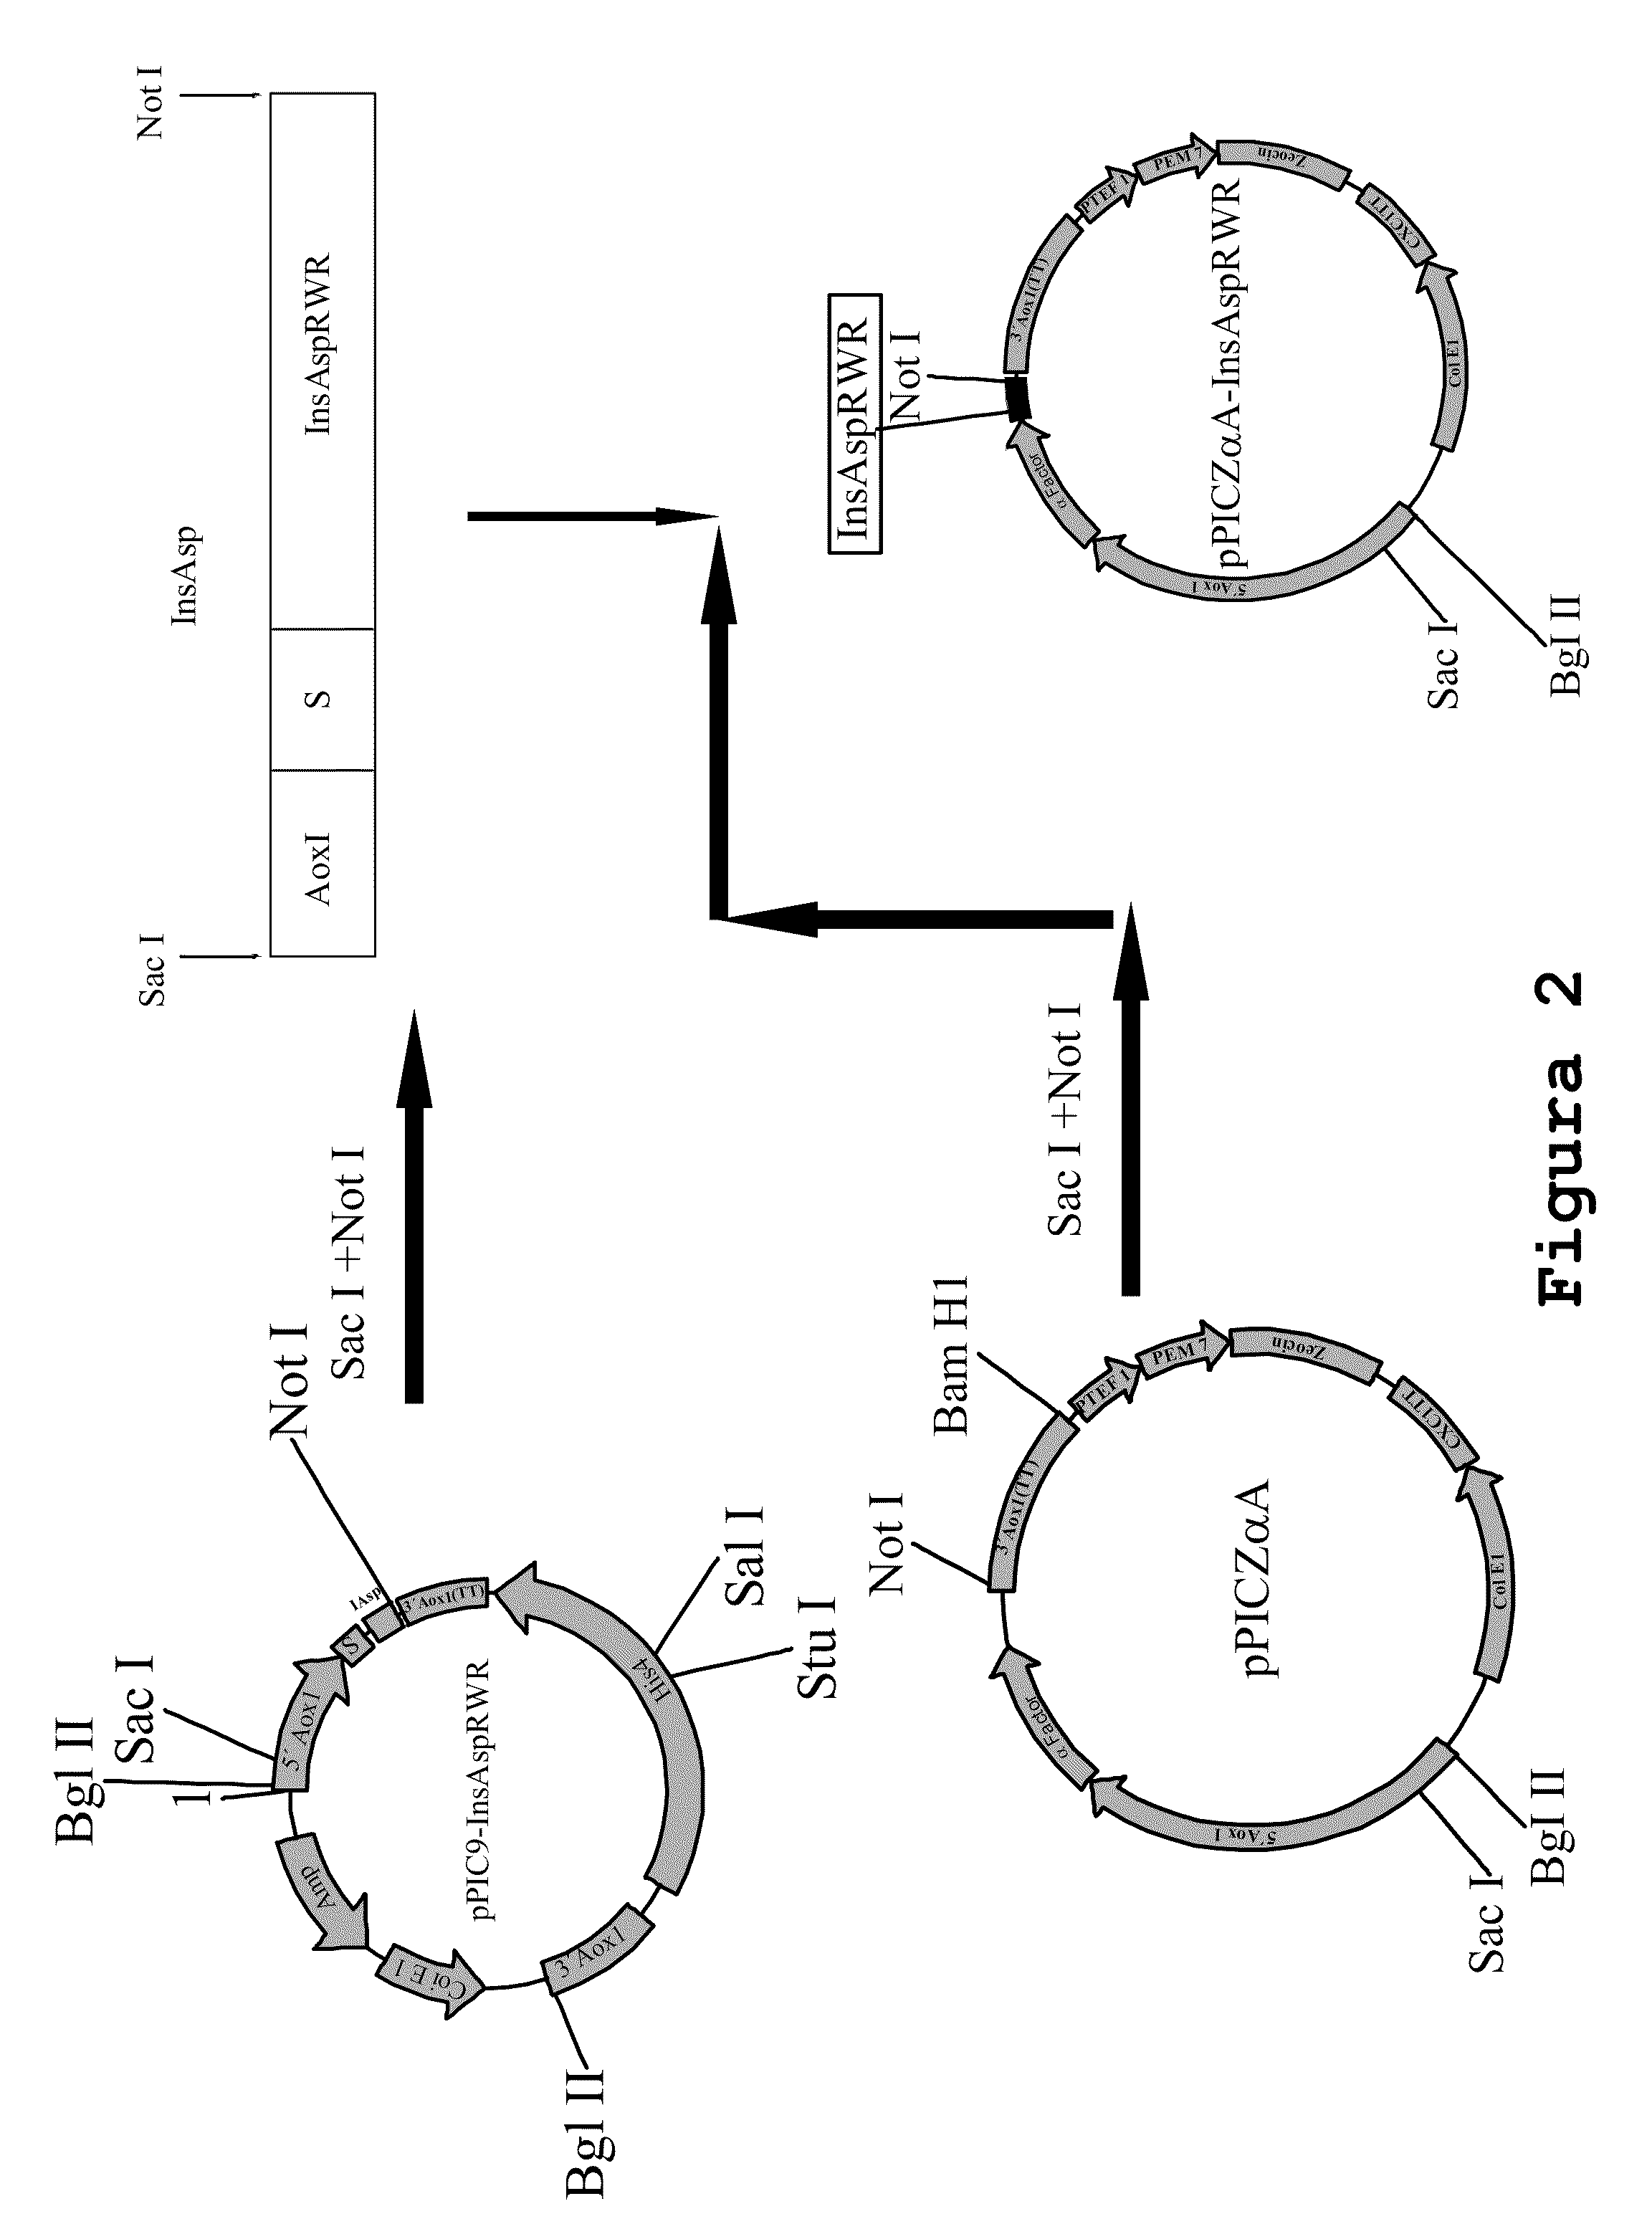 Process for obtaining aspart insulin using a pichia pastoris yeast strain